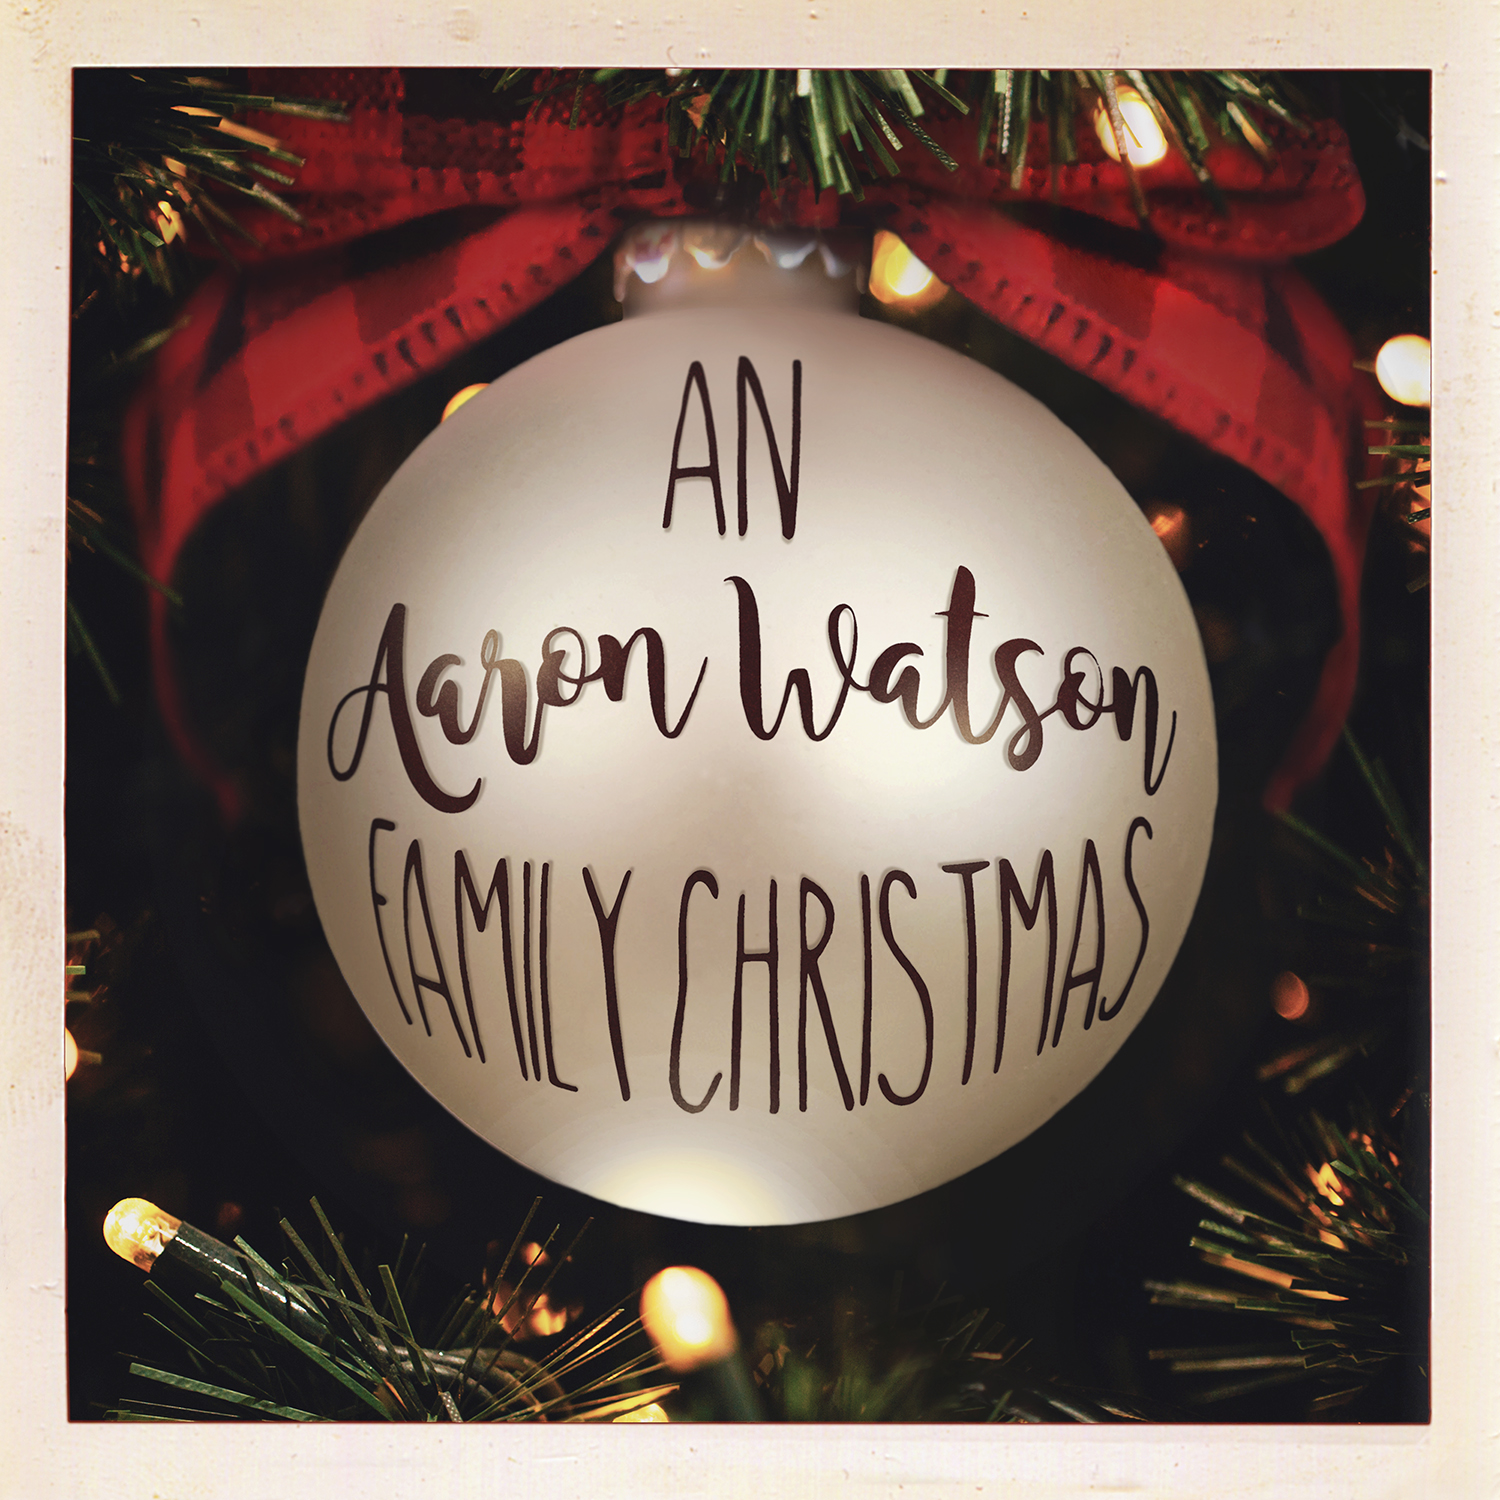 Aaron Watson - An Aaron Watson Family Christmas CD cover art